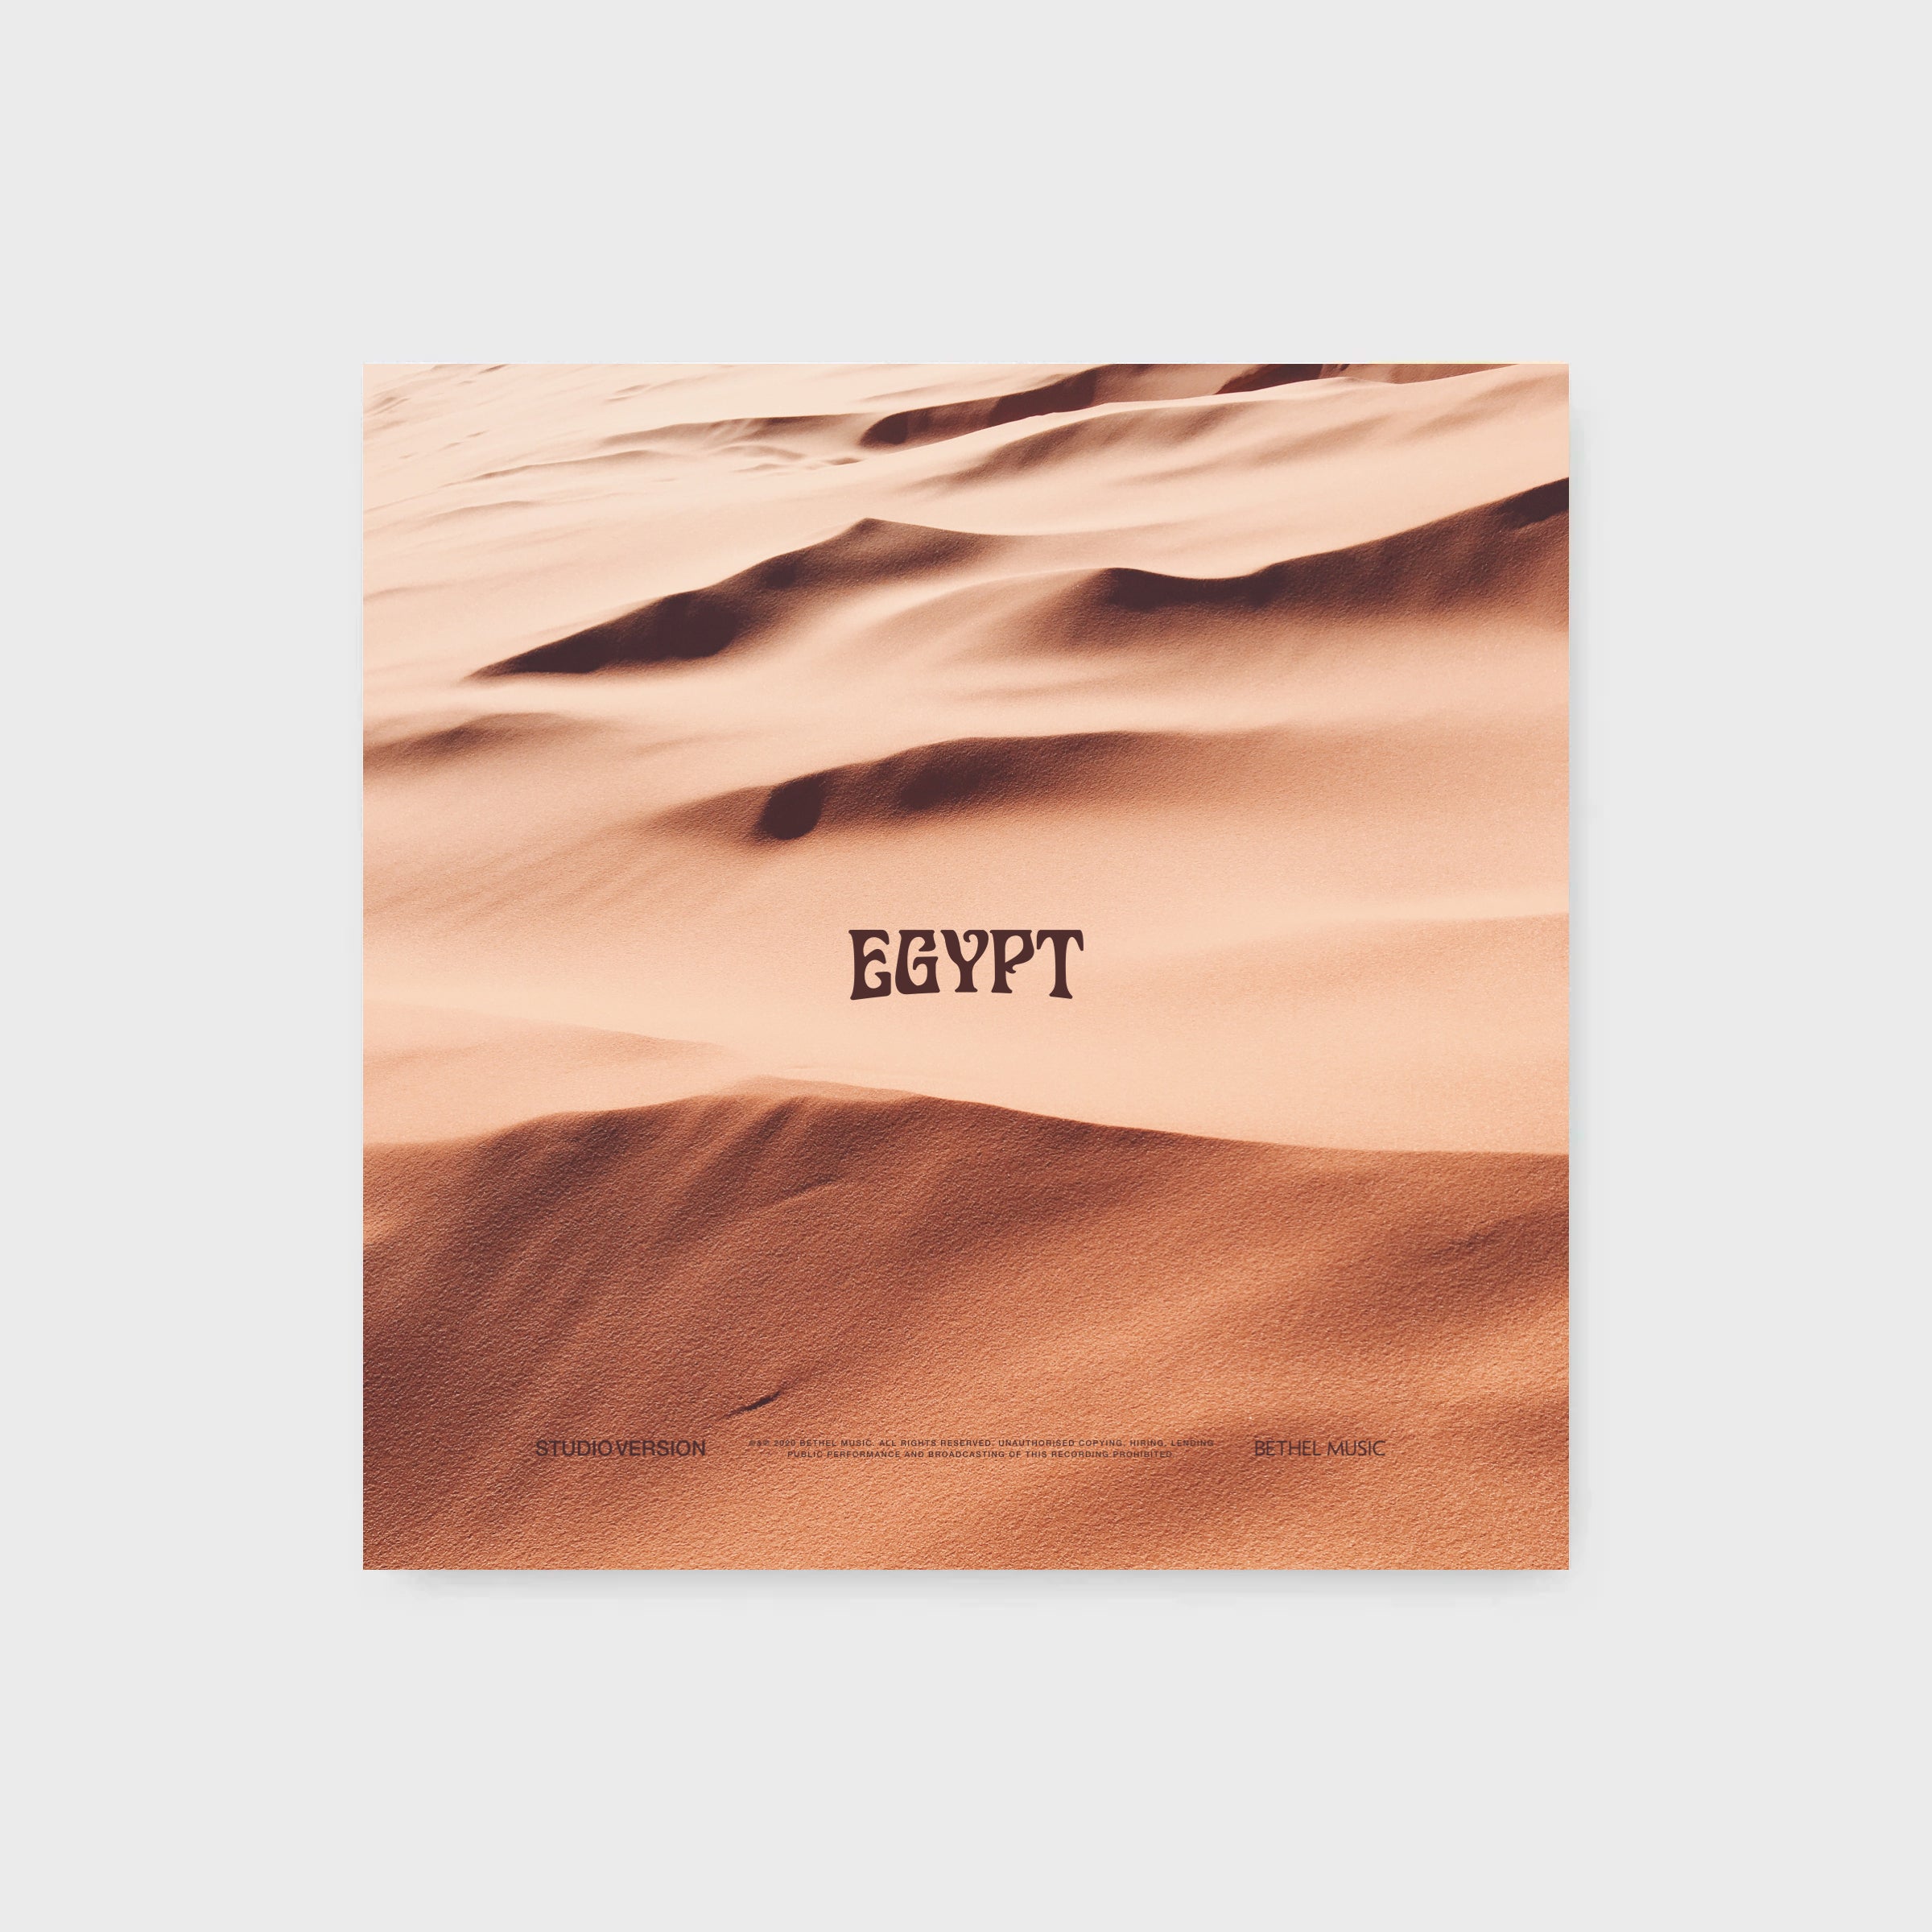 Egypt (Radio Version) Single